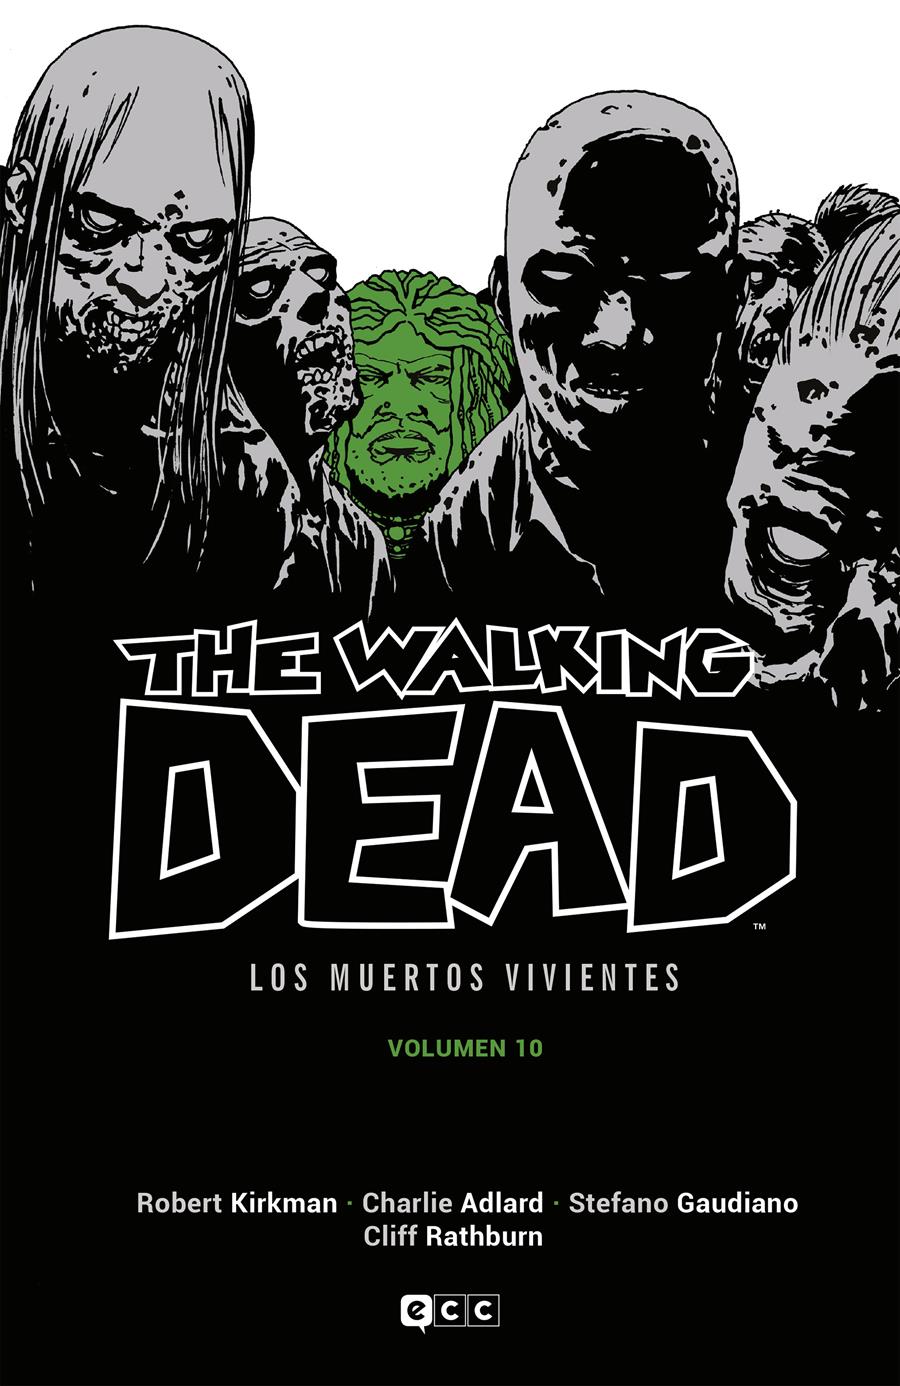 The Walking Dead (Los muertos vivientes) vol. 10 de 16 | N0722-ECC49 | Charlie Adlard / Robert Kirkman | Terra de Còmic - Tu tienda de cómics online especializada en cómics, manga y merchandising